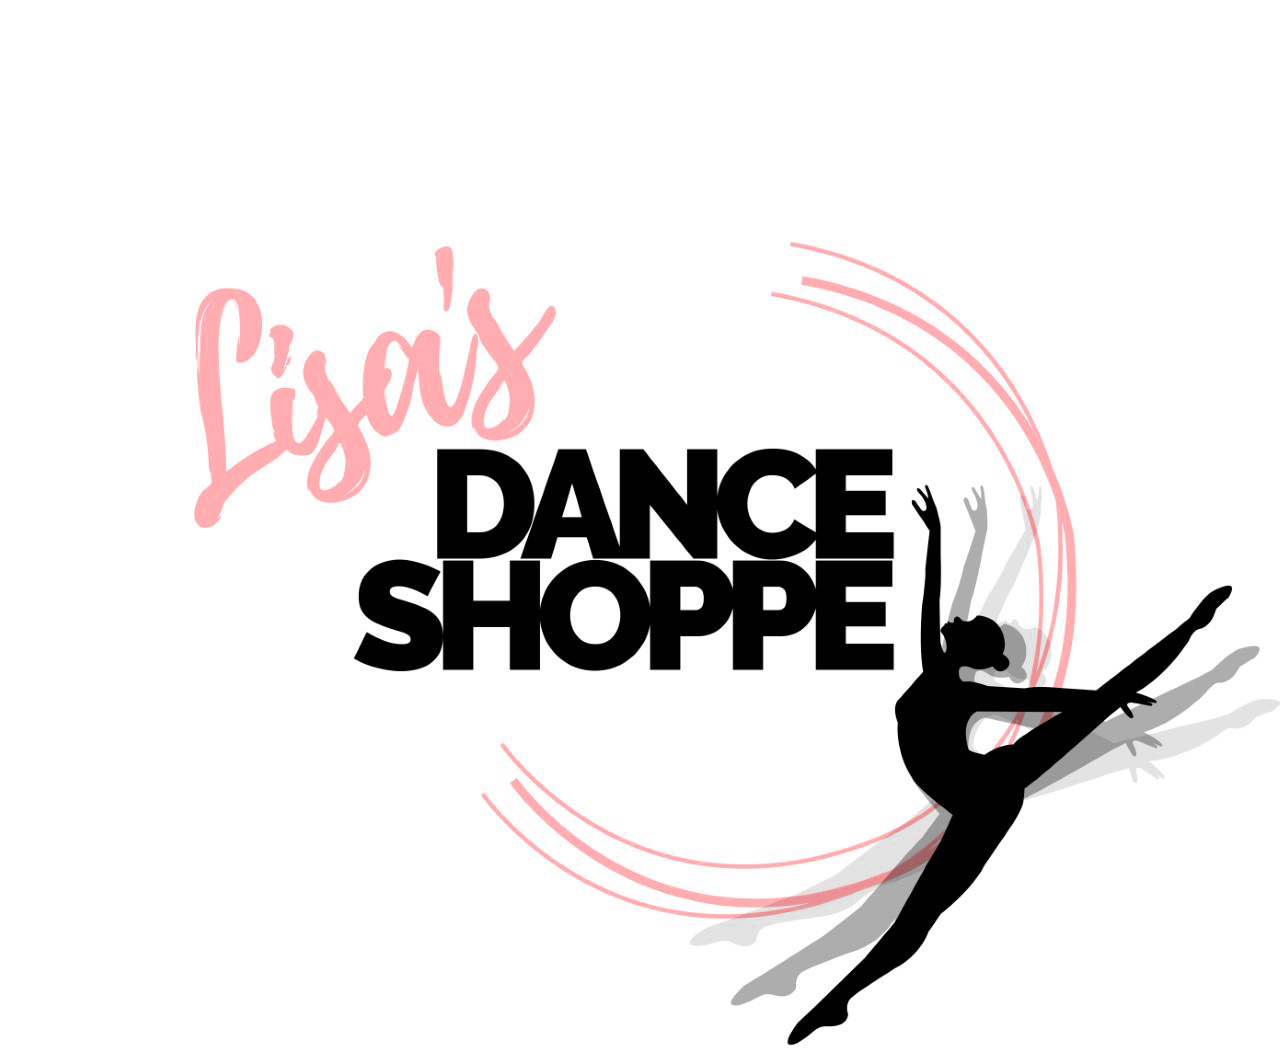 Lisa's Dance Shoppe